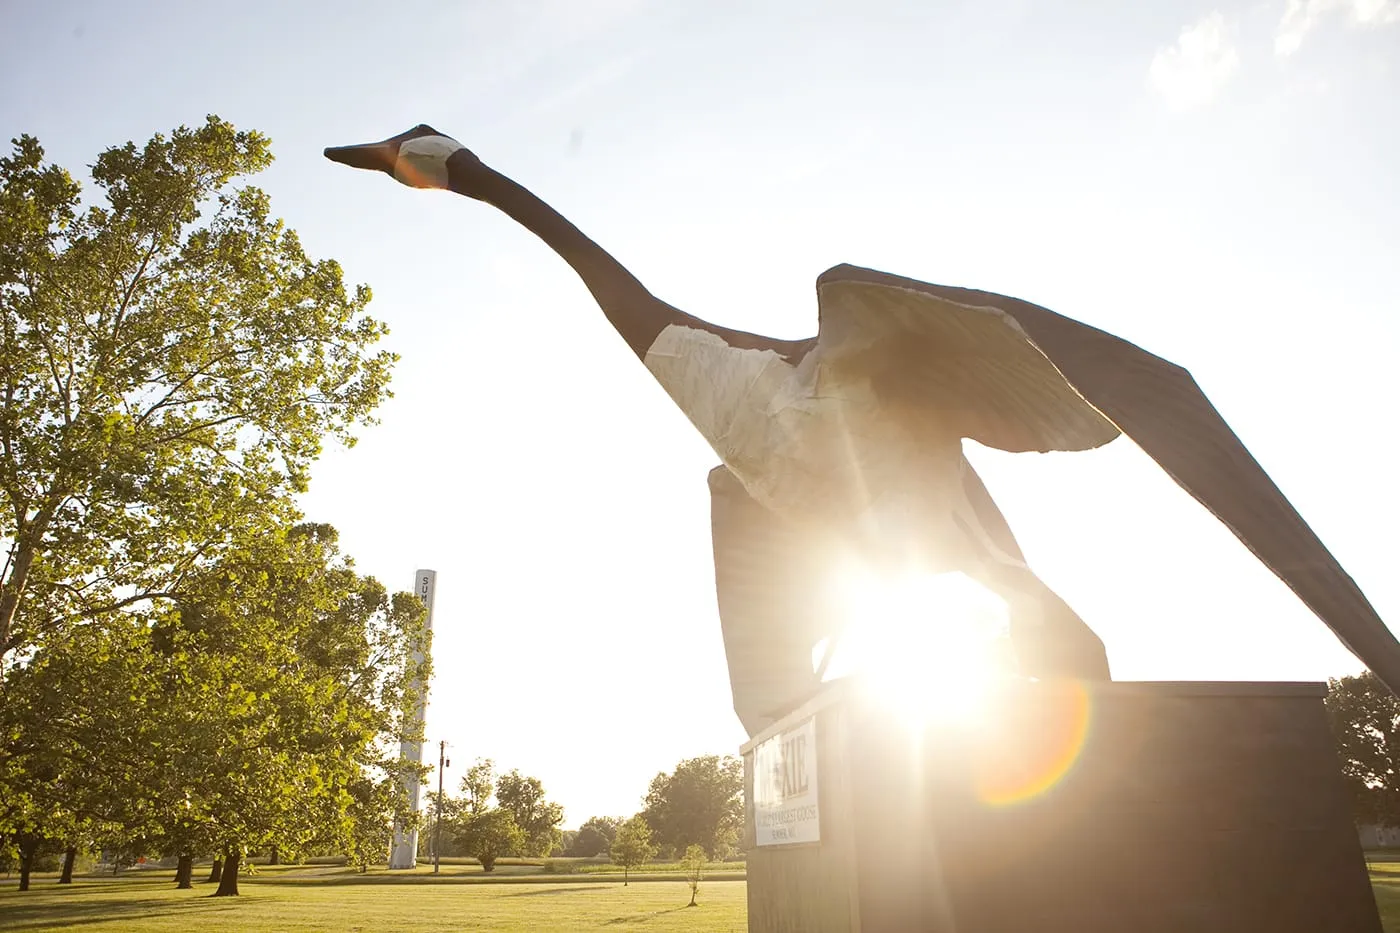 Maxie: The World's Largest Goose in Sumner, Missouri